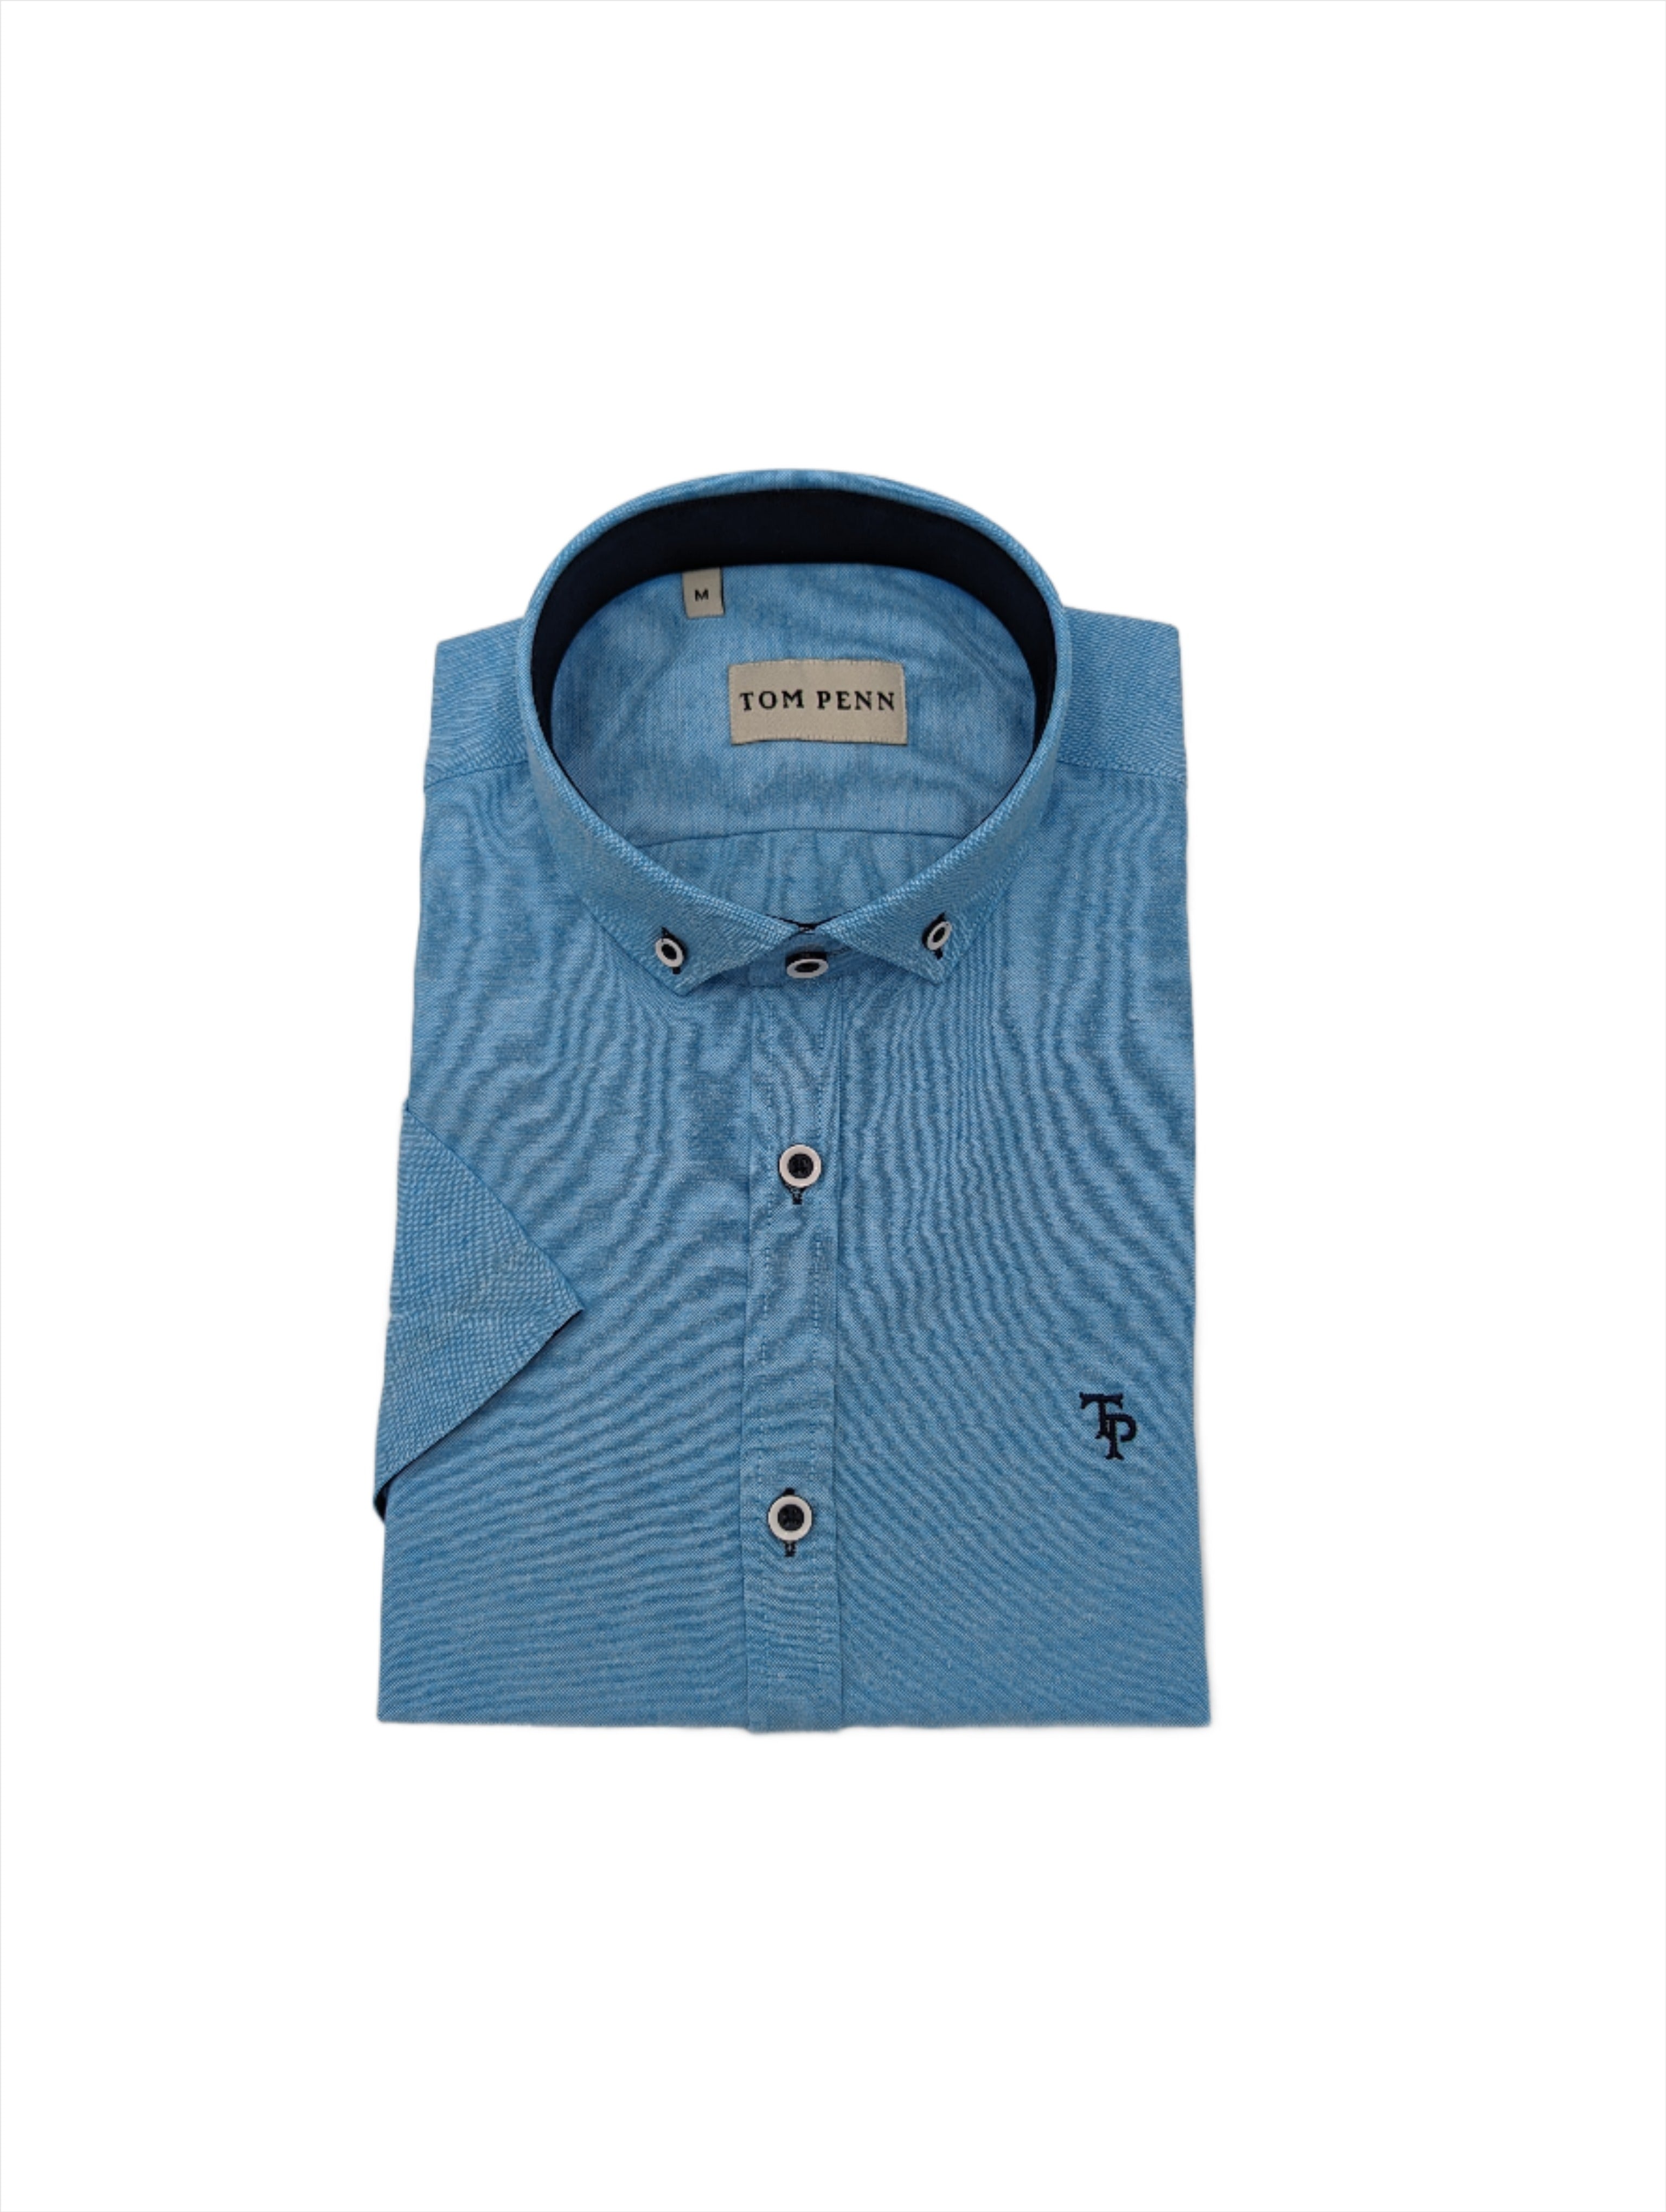 Short Sleeve Oxford Turquoise Shirt